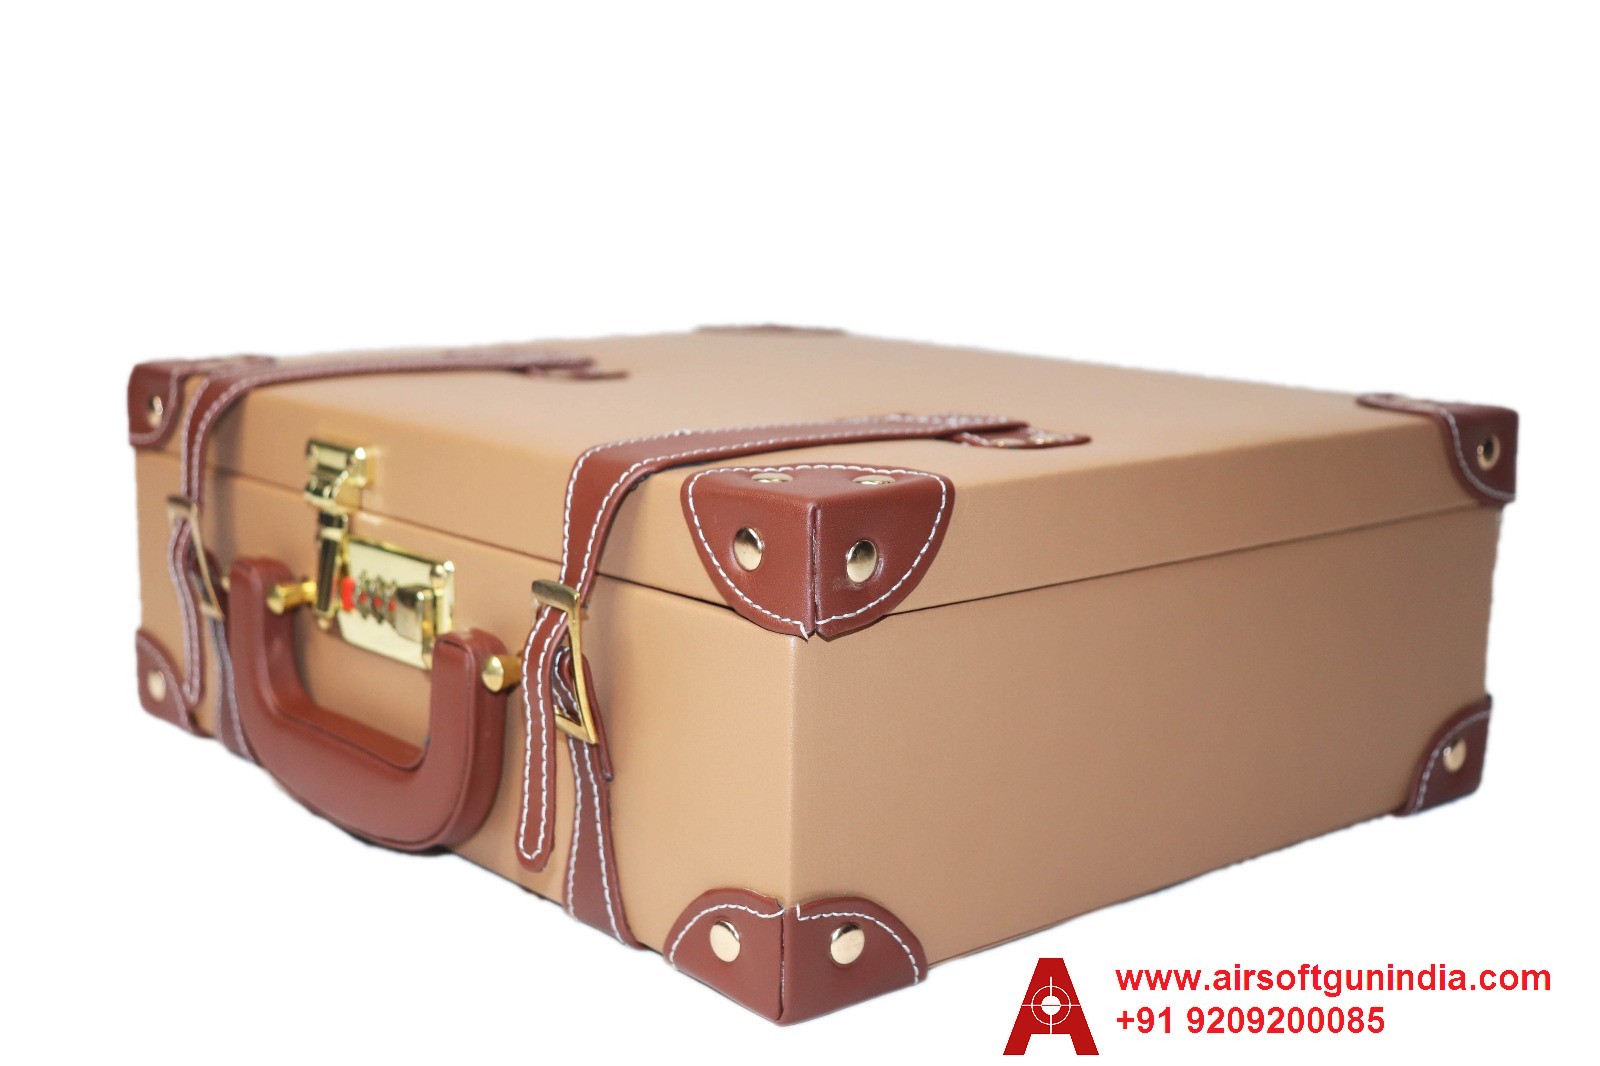 Vintage Retro Luxury Suitcase/Gun Box In Brown Shade By Airsoft Gun India